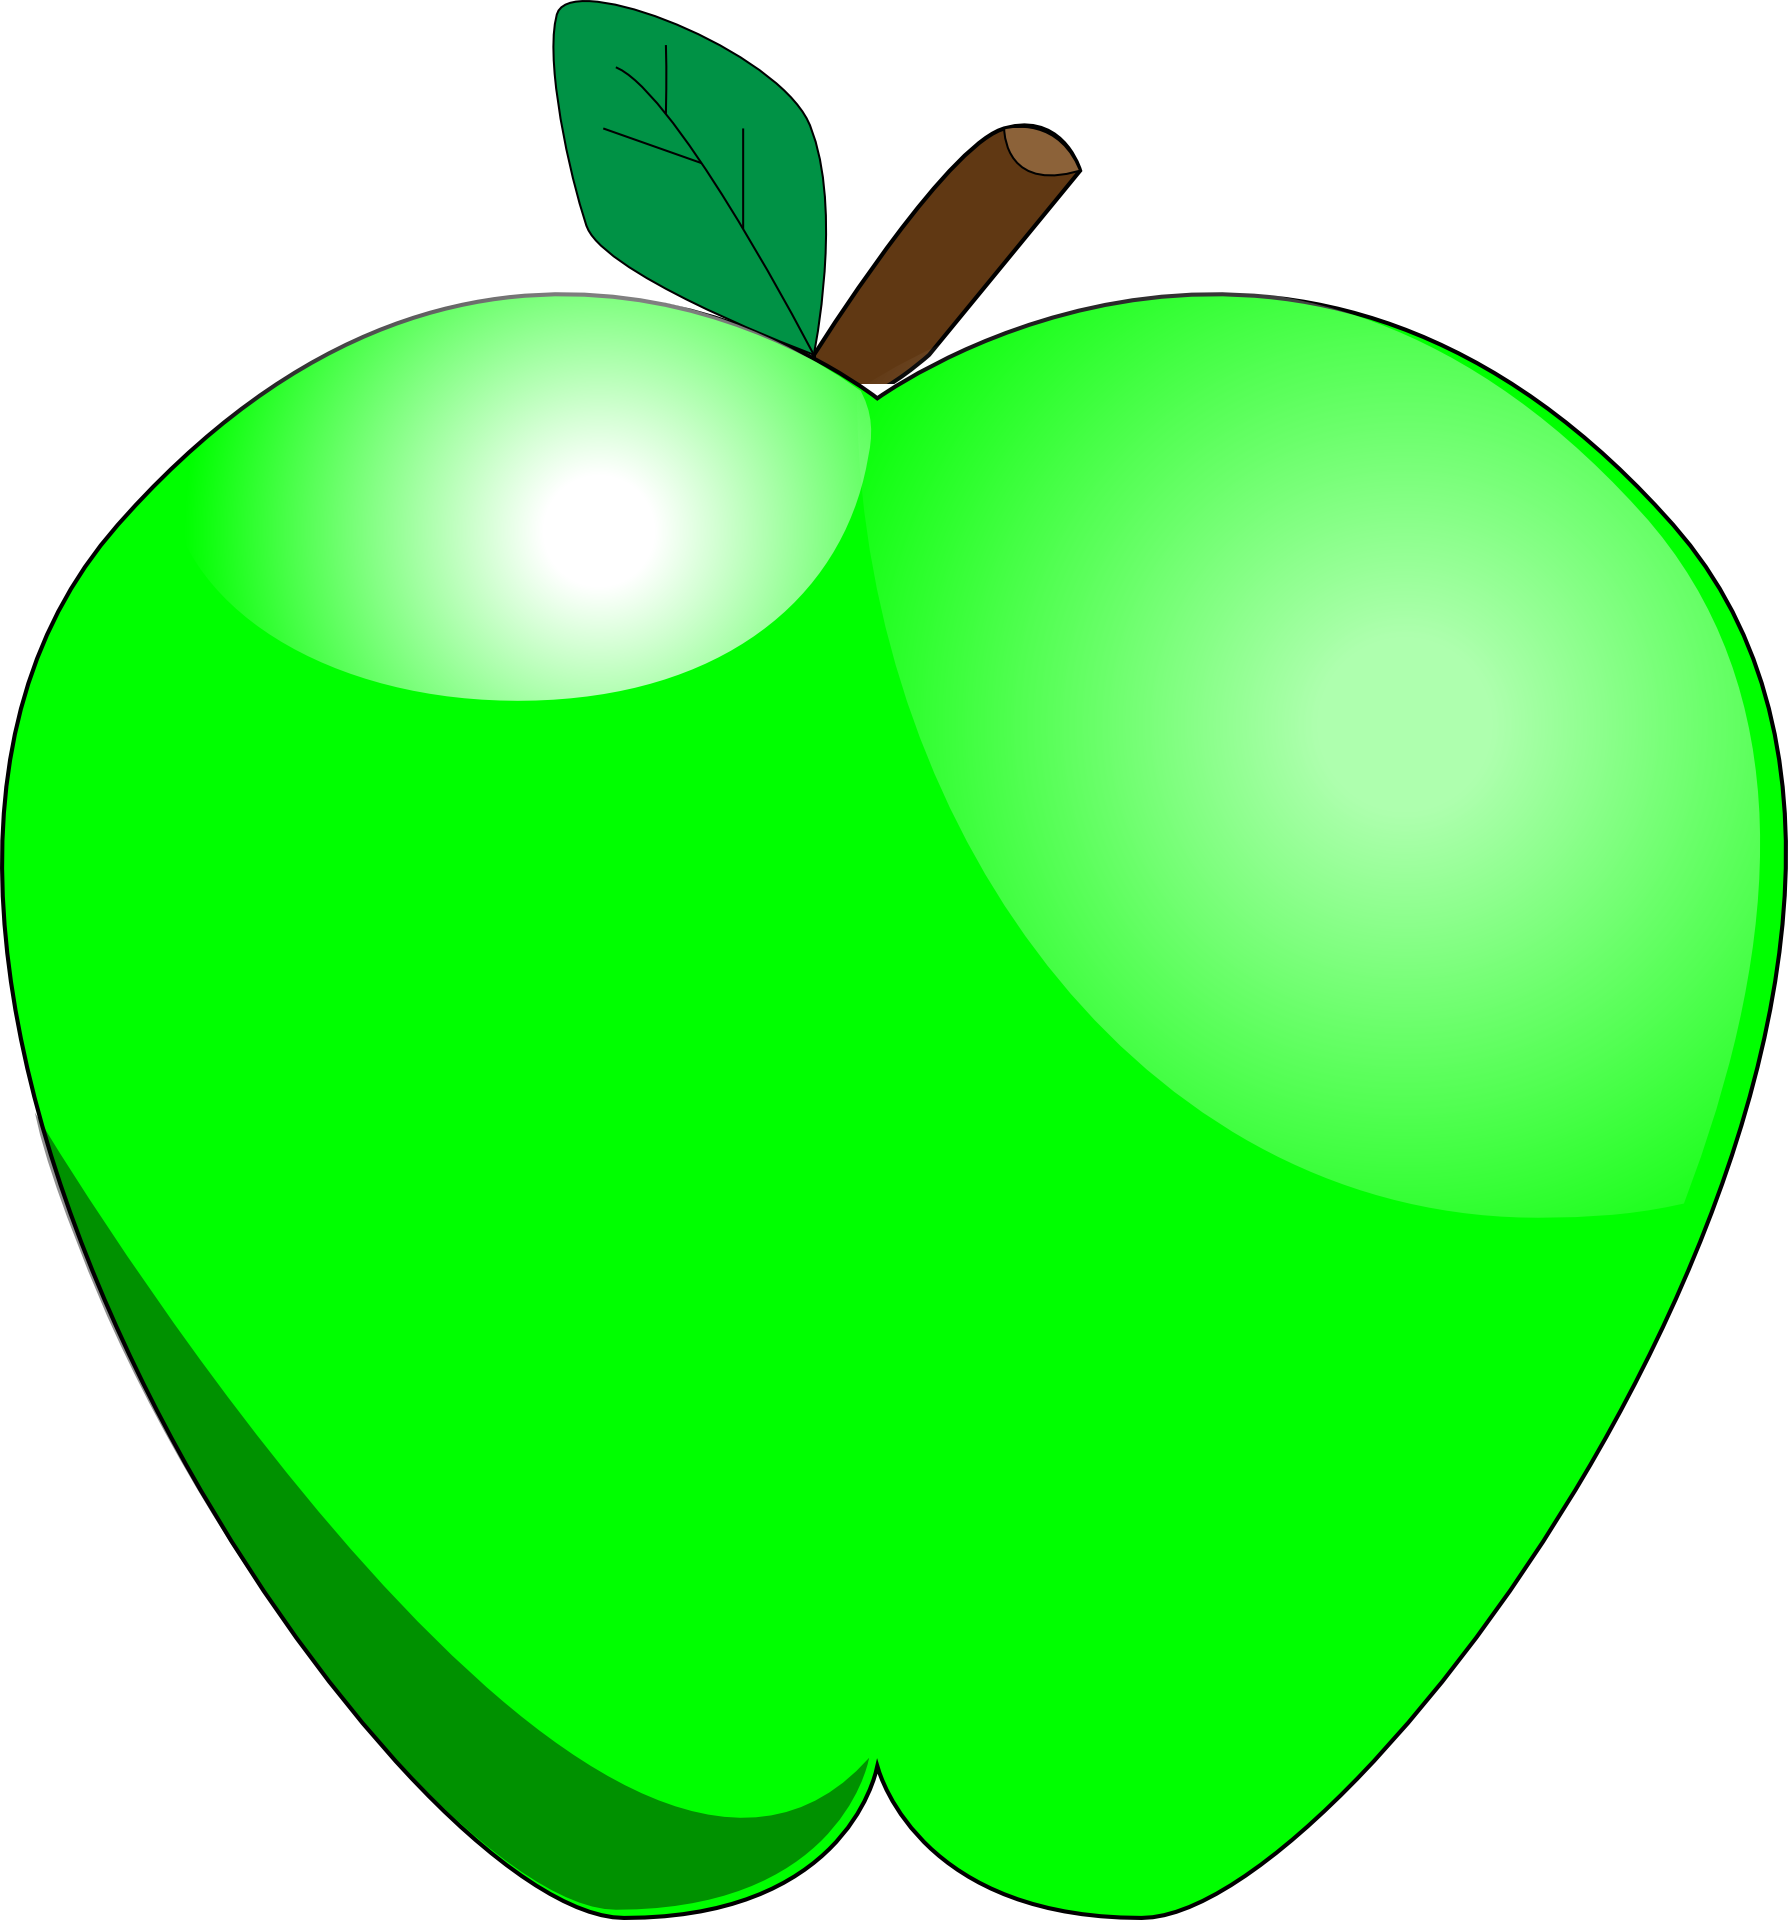 Fresh green apple drawing free image download